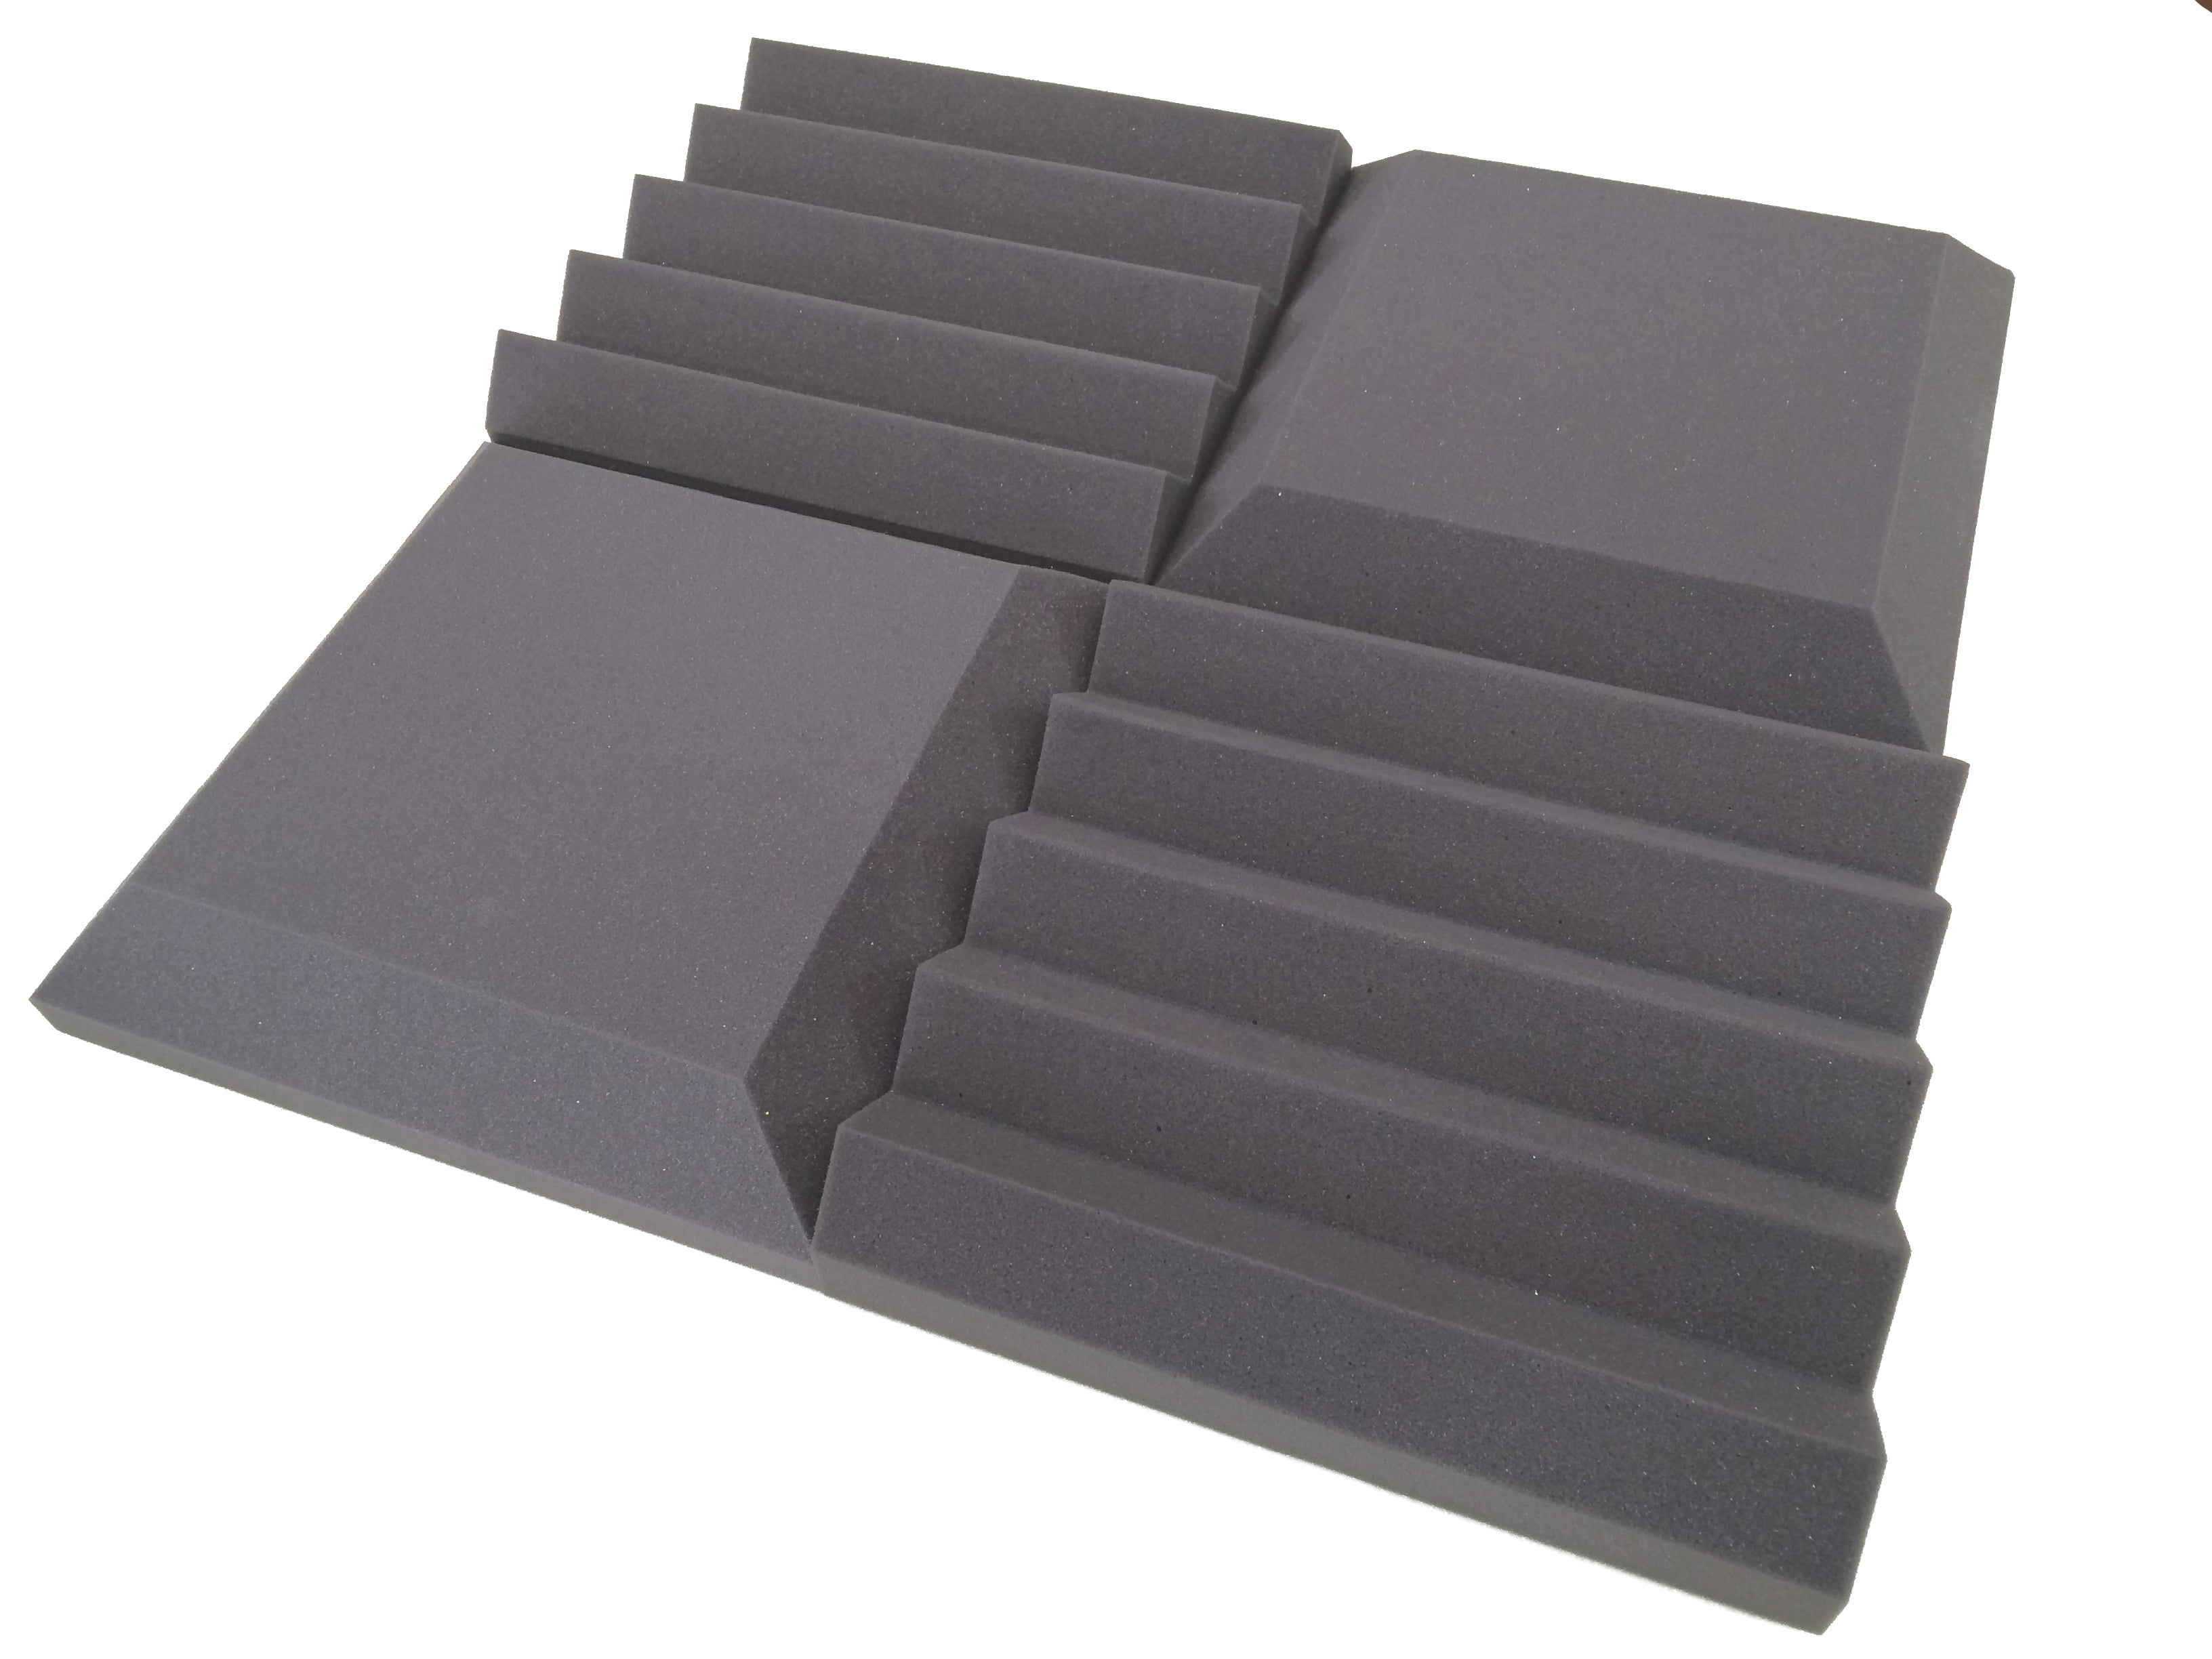 Kaufen mittelgrau Euphonic Wedge PRO Acoustic Studio Foam Tile Pack – 24 Tiles, 3,48 m² Abdeckung